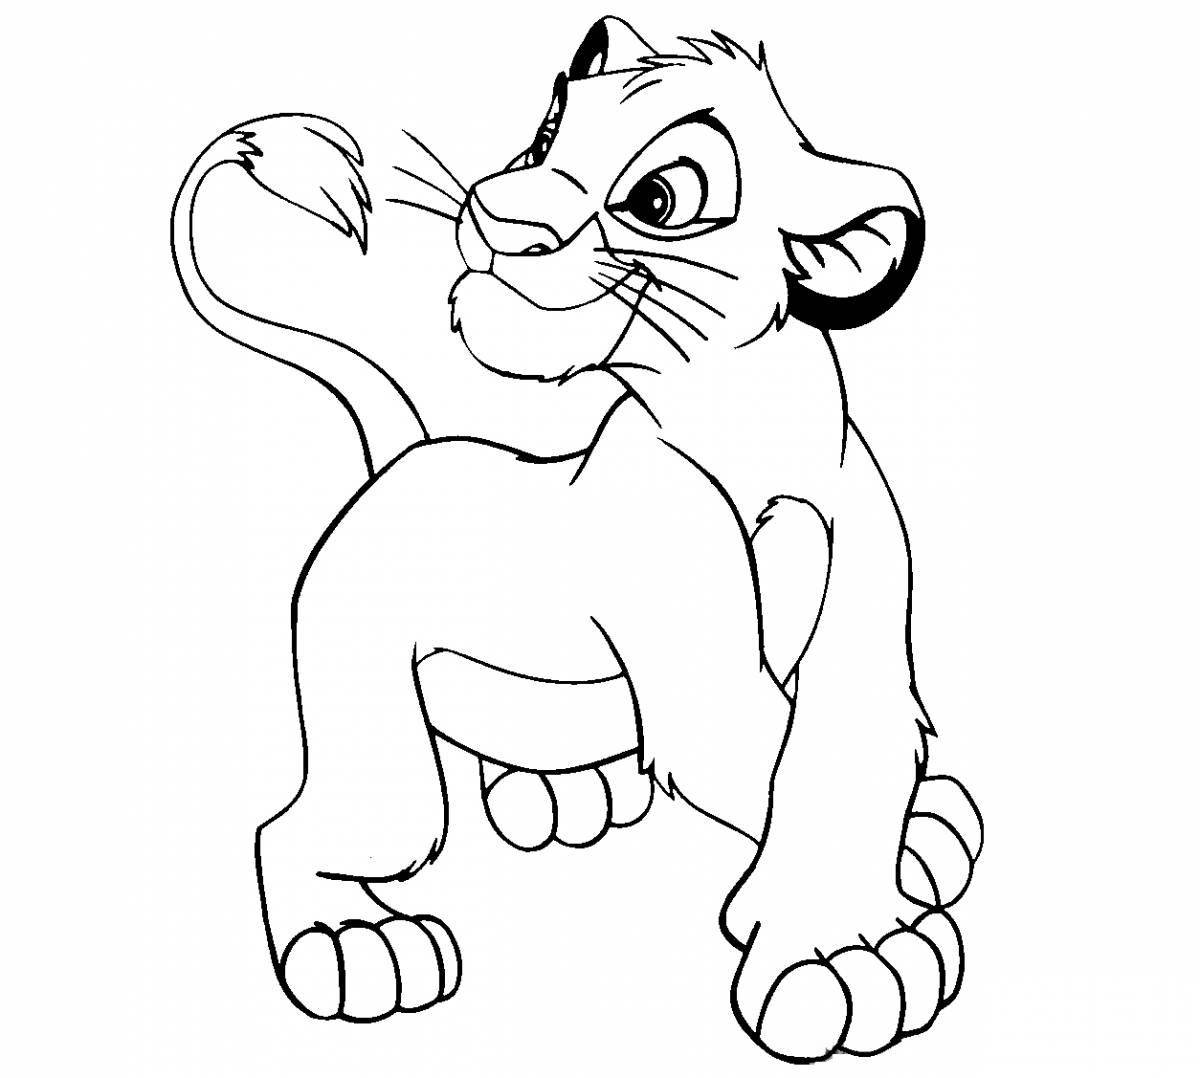 Simba playful coloring for kids